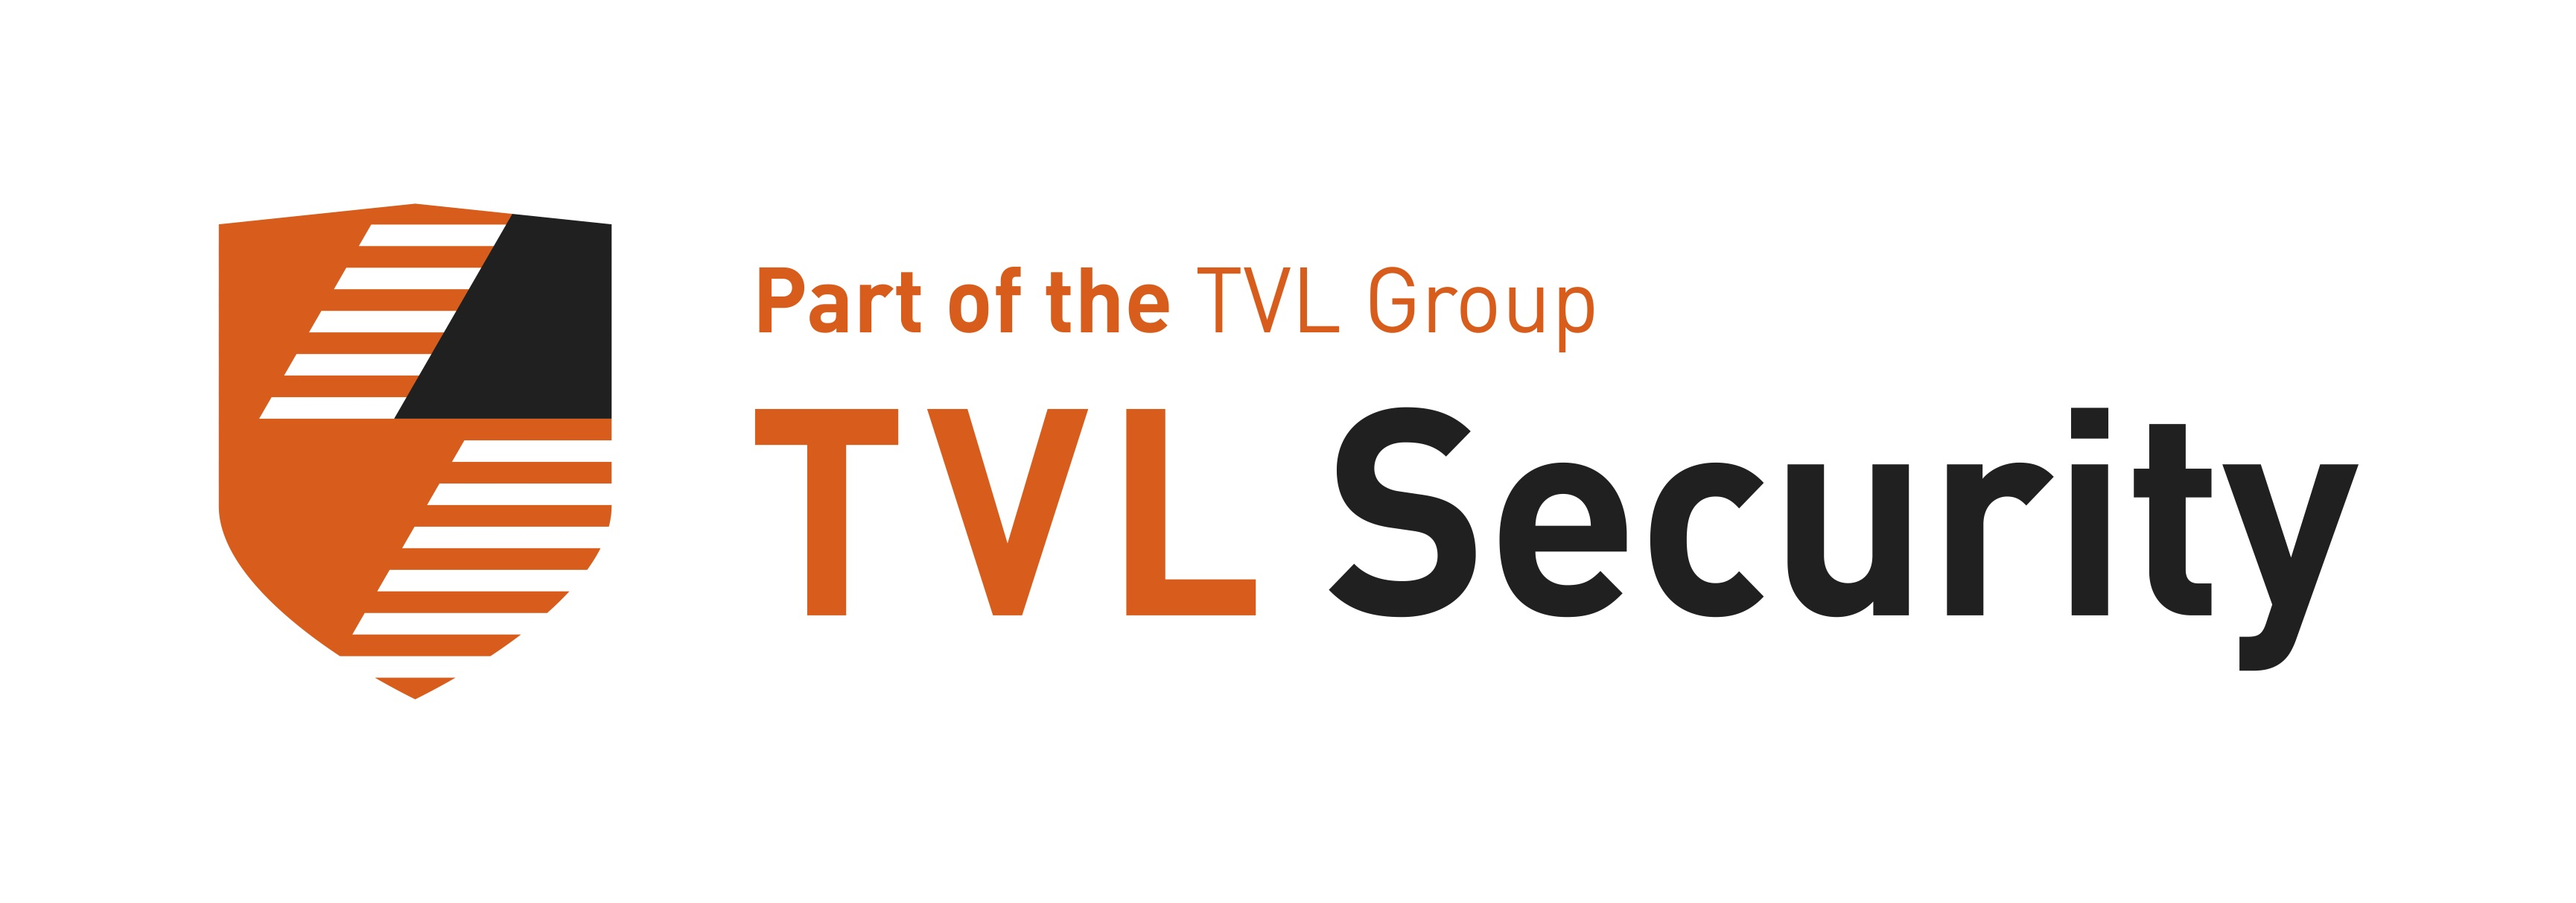 TVL Security Ltd